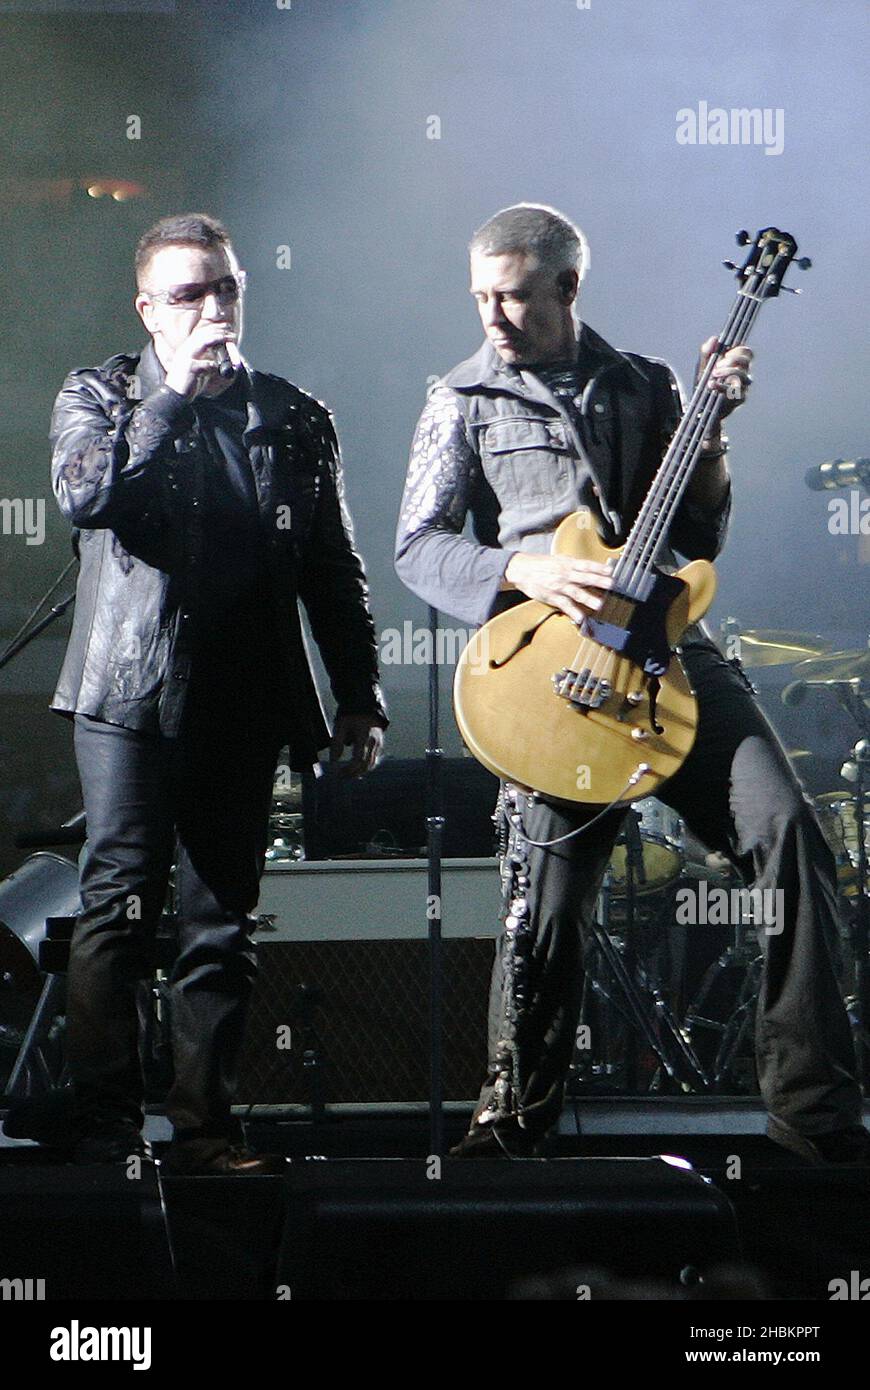 Bono and Adam Clayton of U2 perform at Wembley Stadium in London, UK Stock Photo